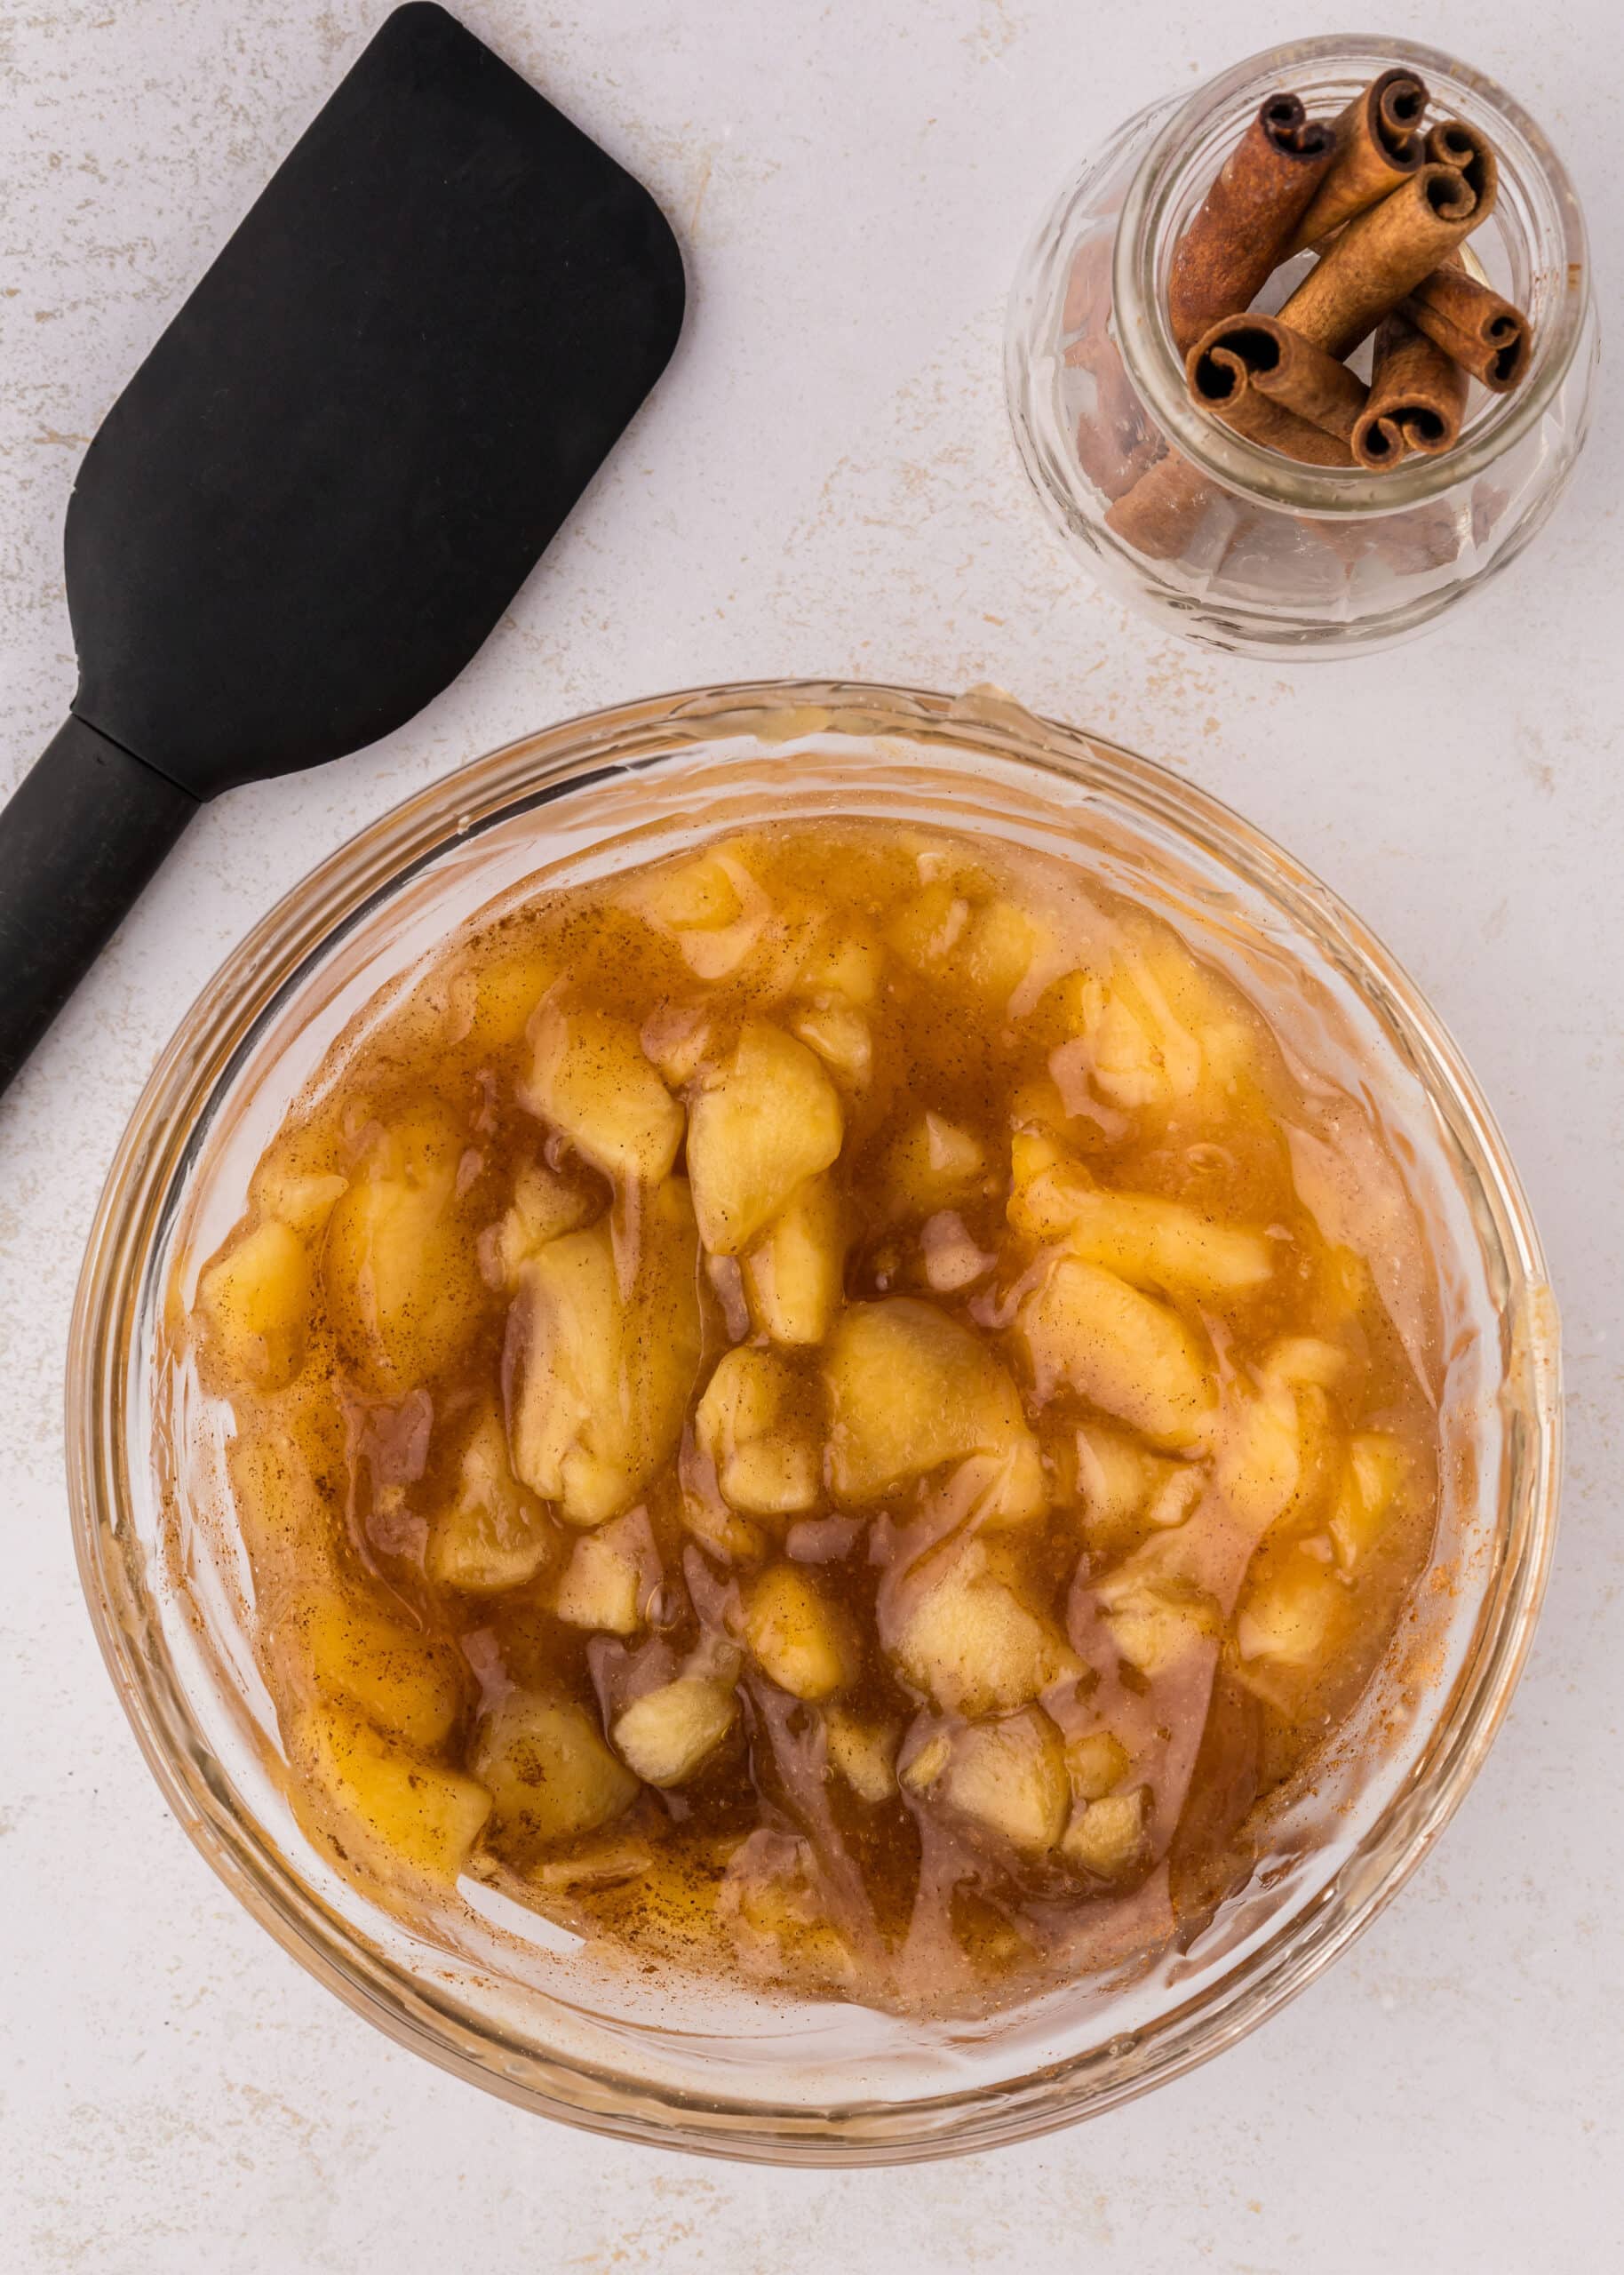 How to make cinnamon apple panna cotta